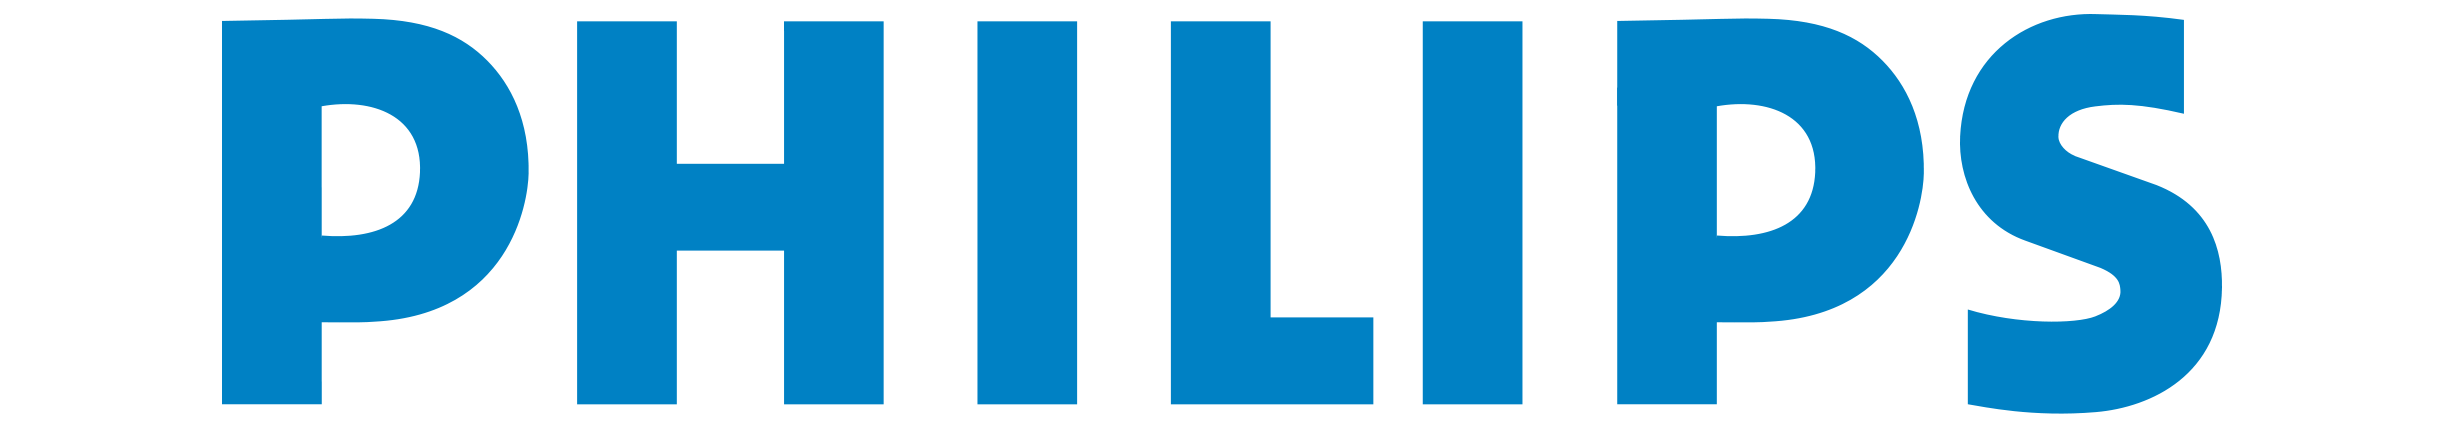 Сайт филипс россия. Филипс логотип. Логотип телевизора Philips. Пхилипс лого. Товарный знак Филипс.